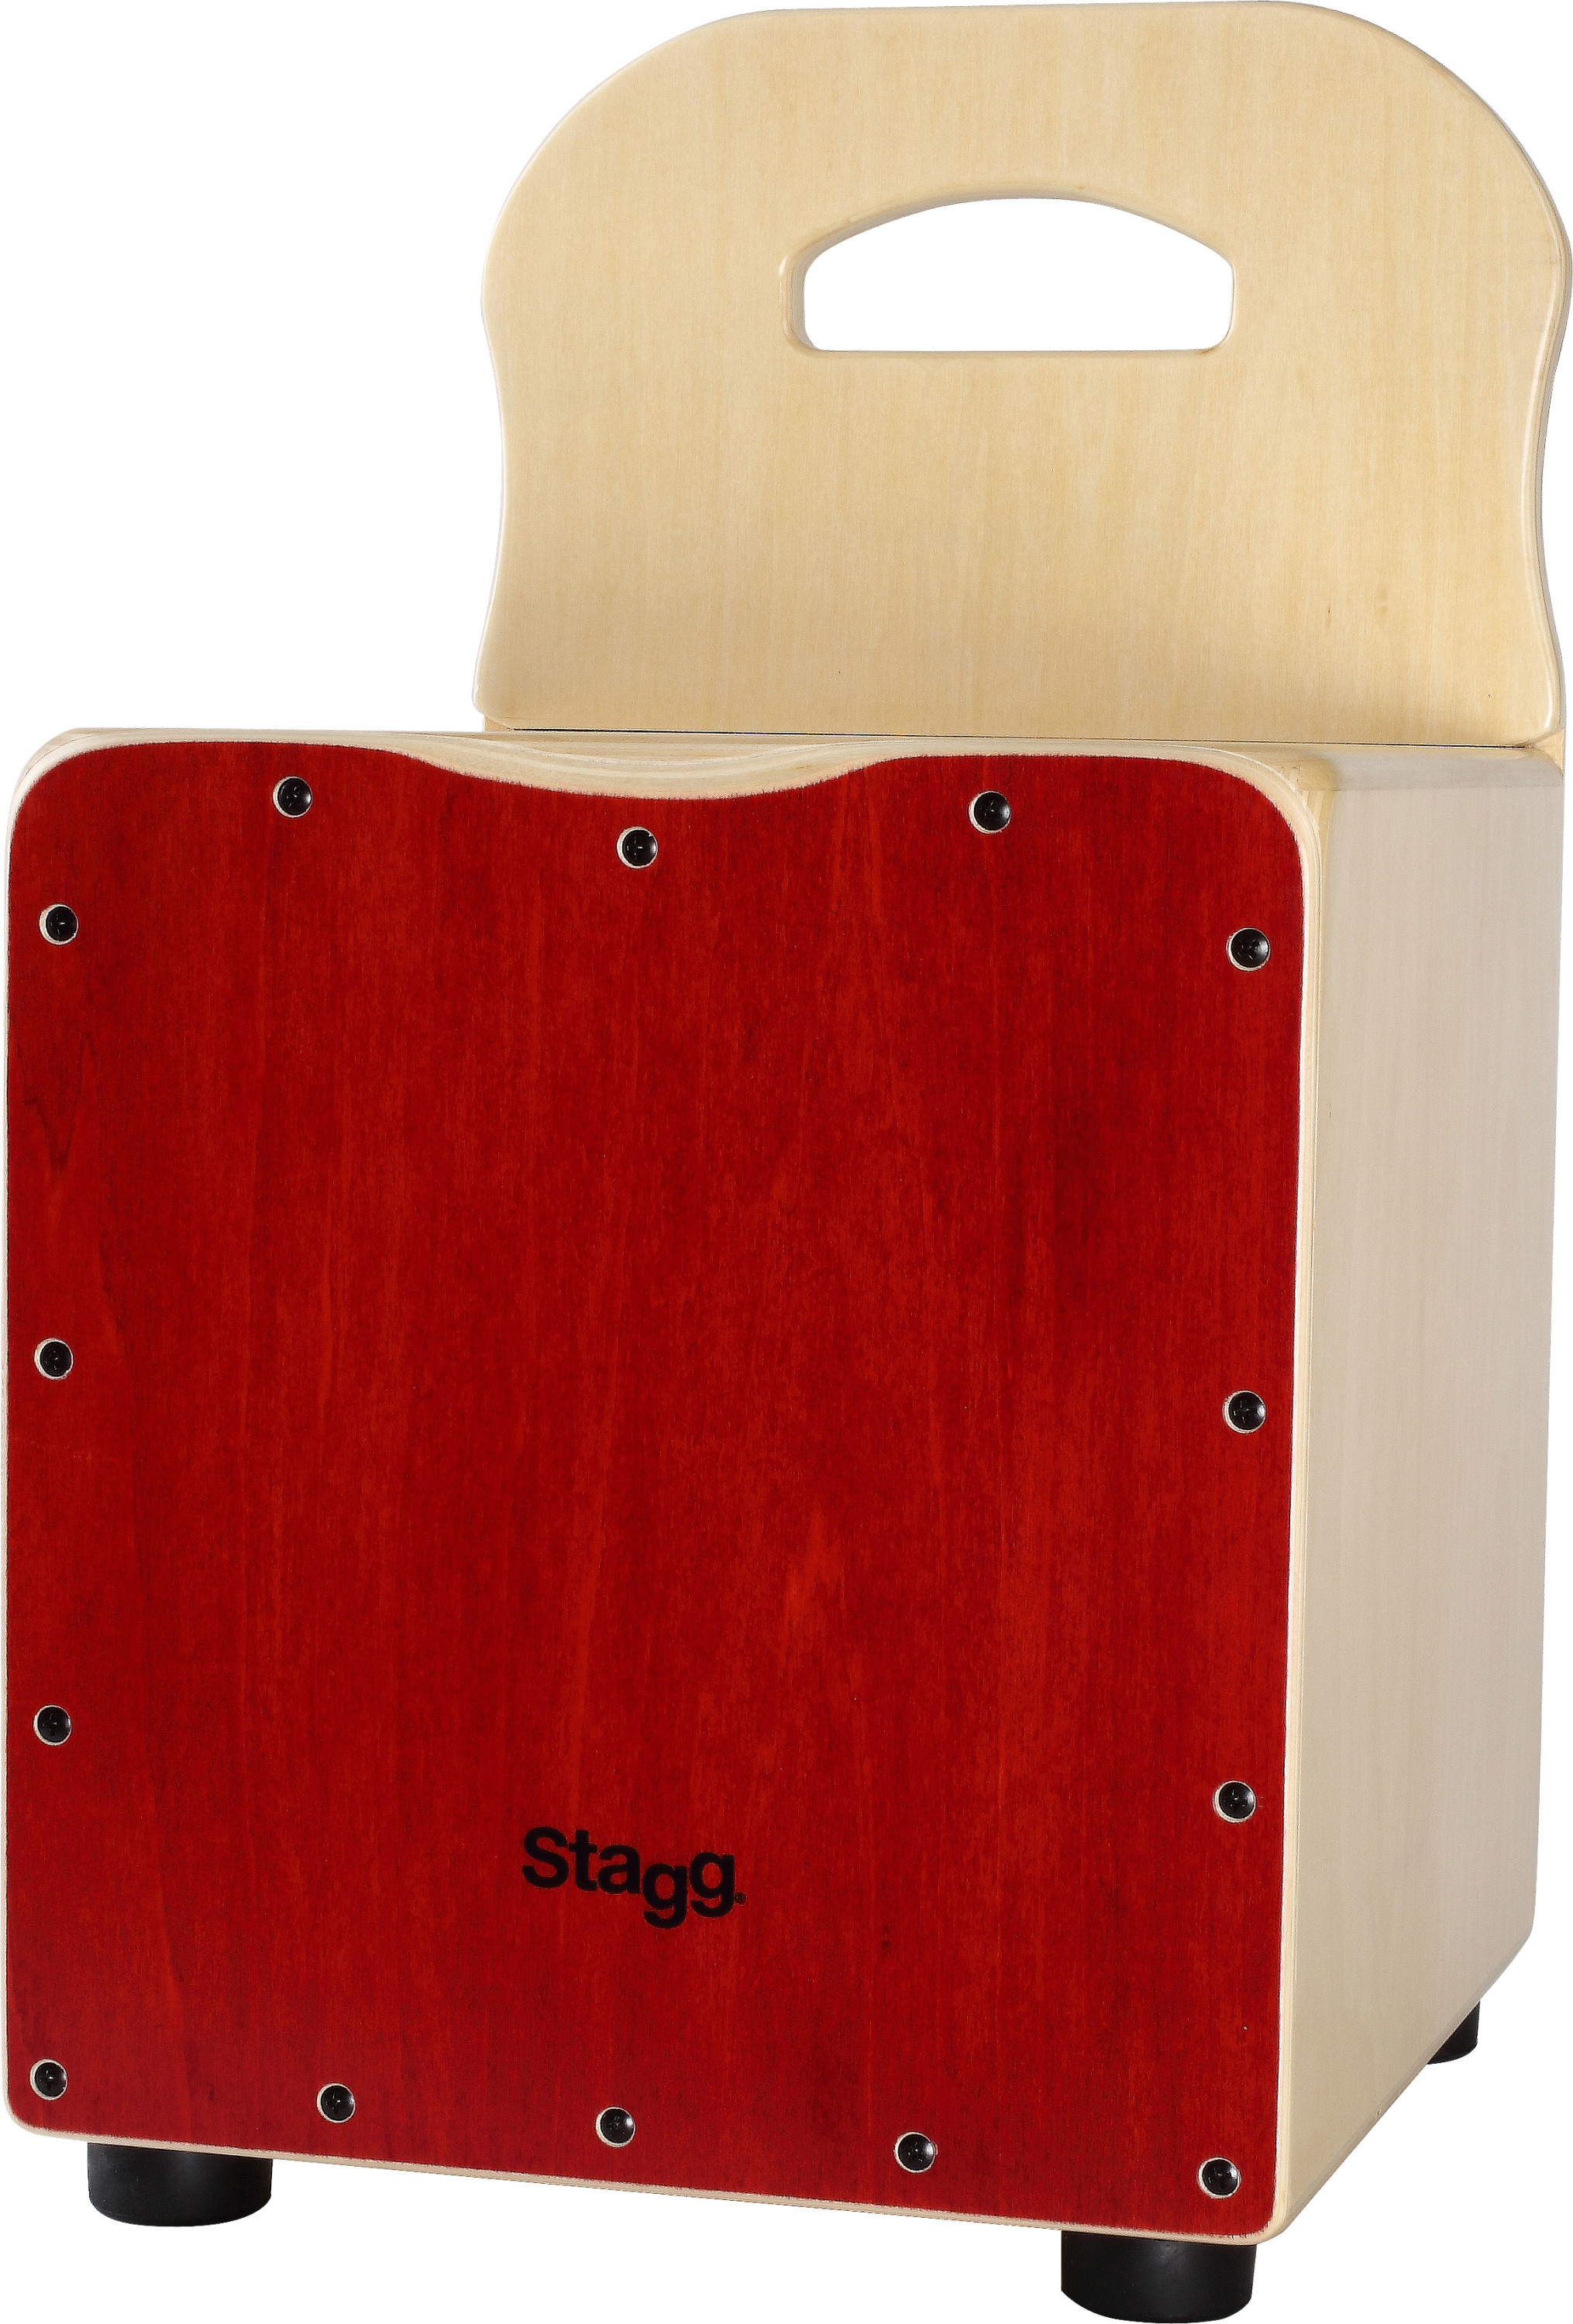 Stagg Easygo Cajon Enfant Rouge - Percusión para golpear - Variation 1